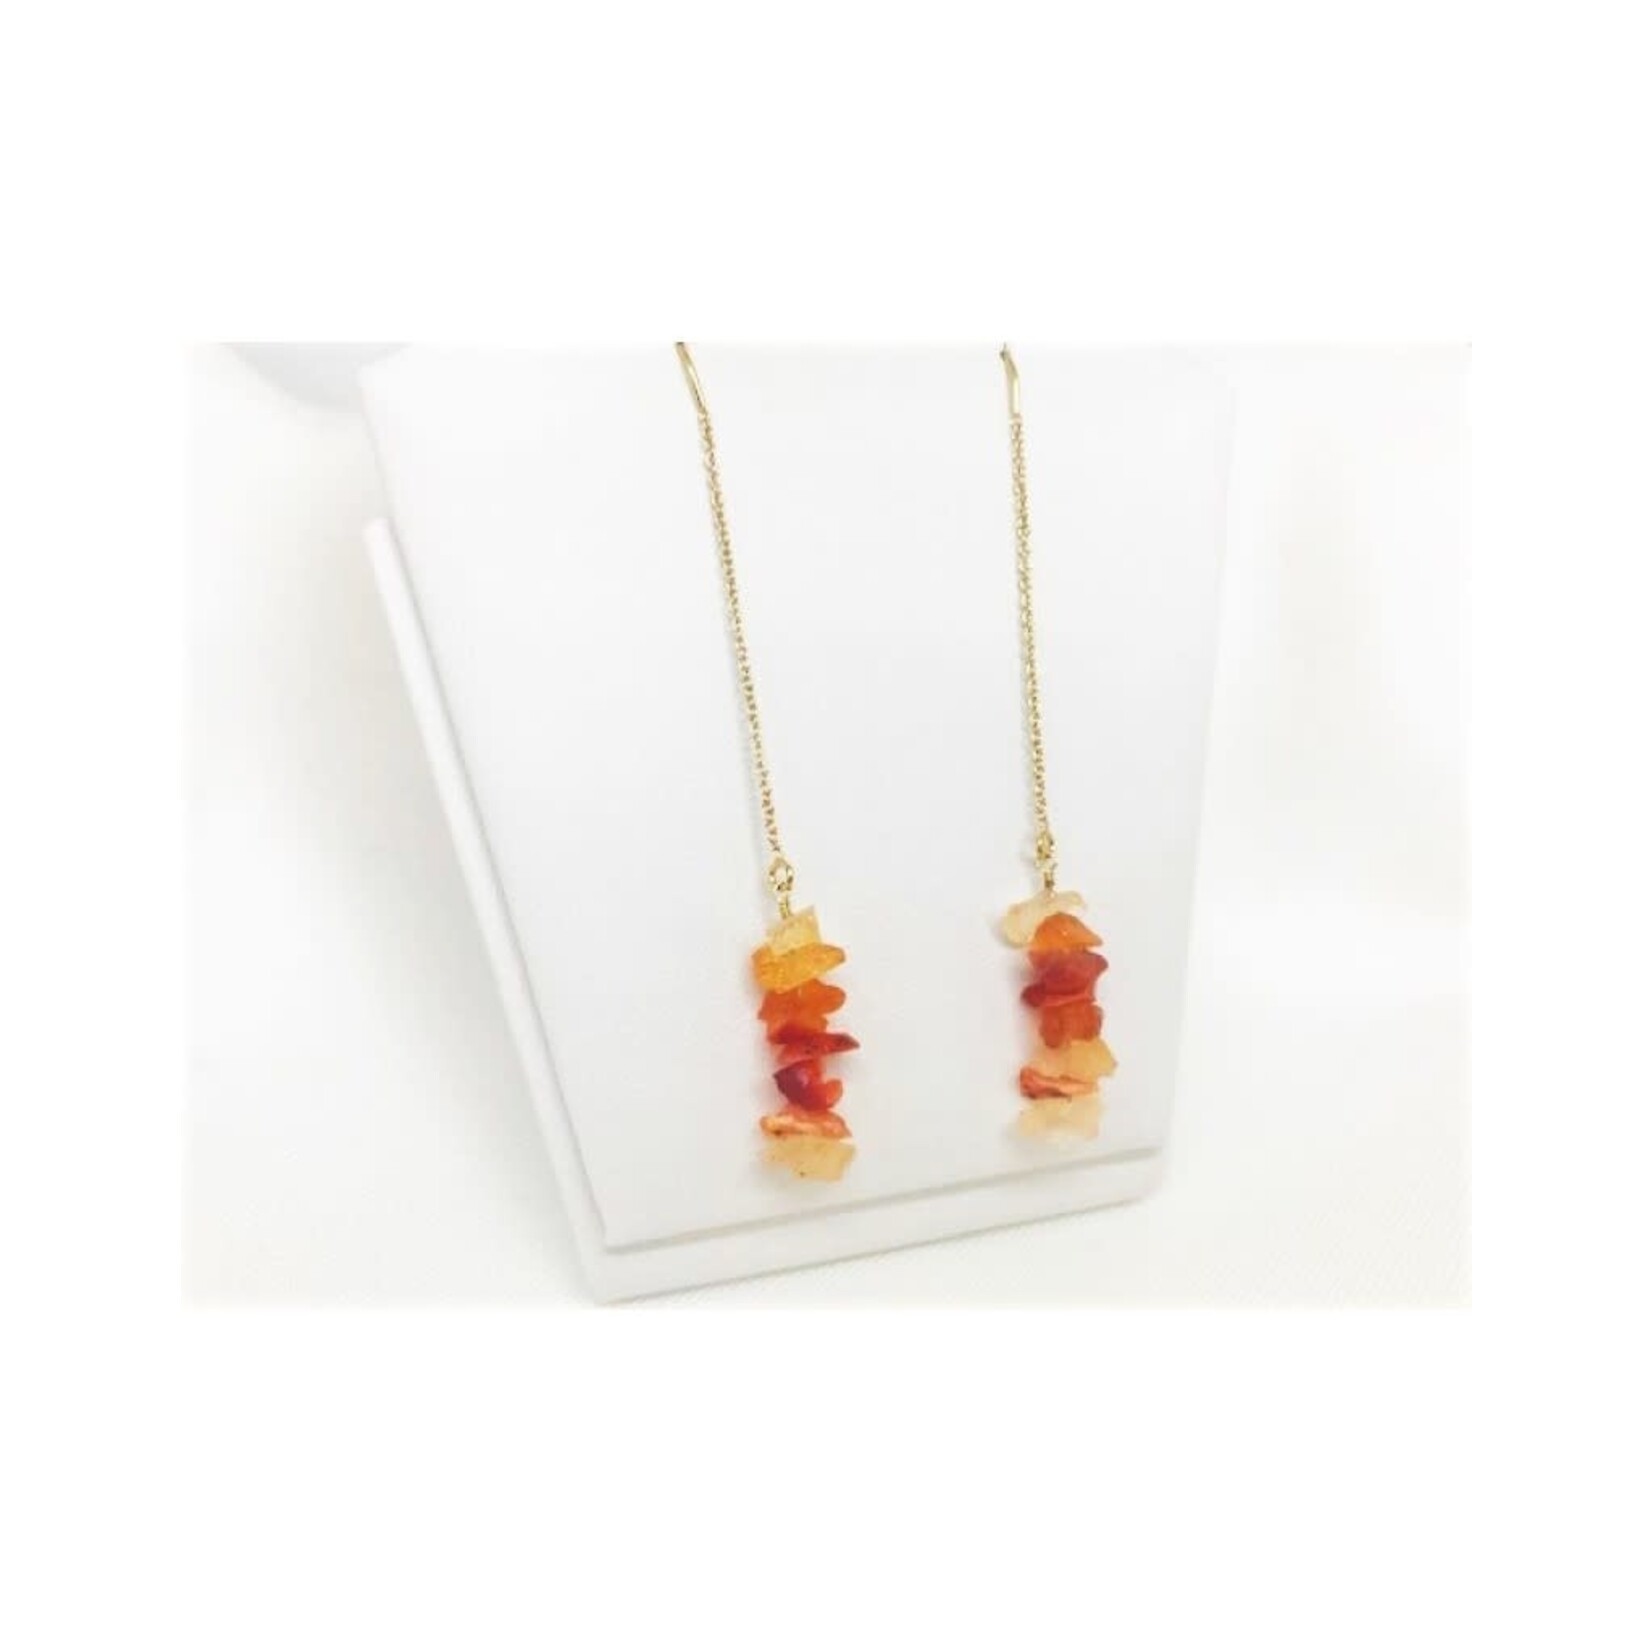 Thread Through Earrings - Fire Opal/Gold